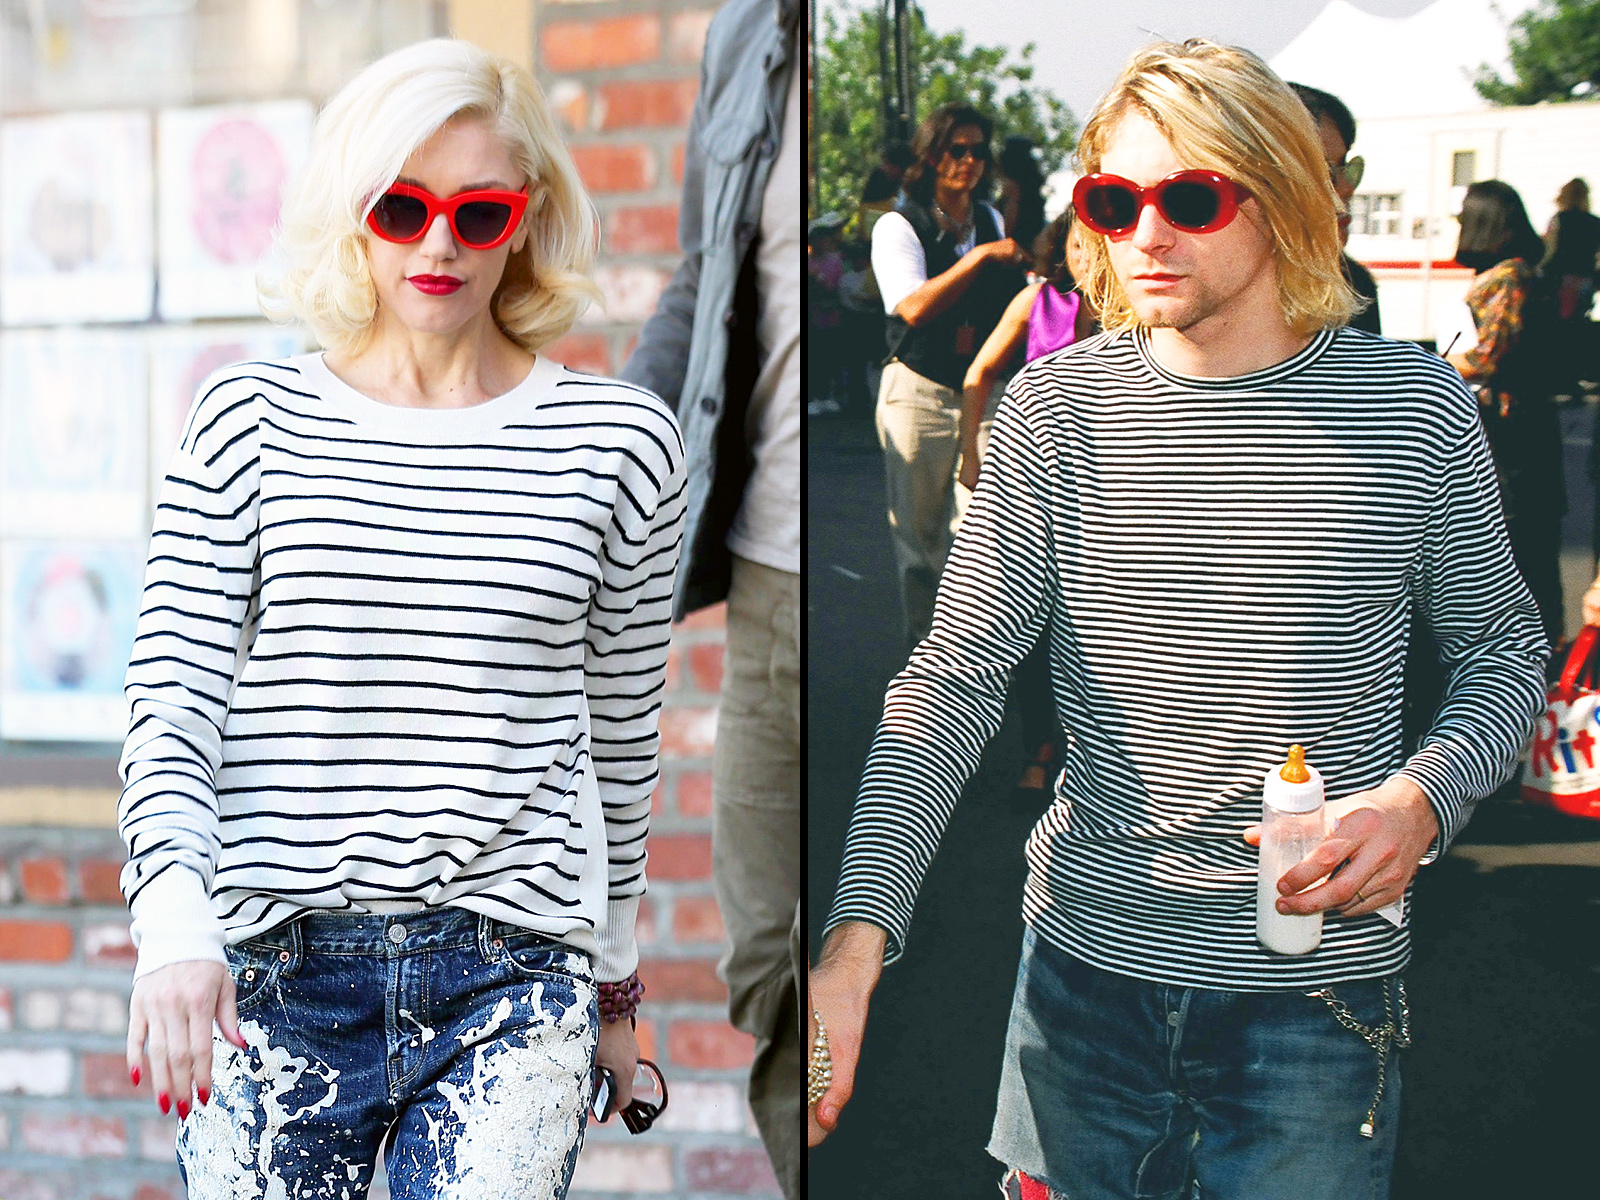 Gwen Stefani Channels Kurt Cobain in Street Style Outfit: Photos